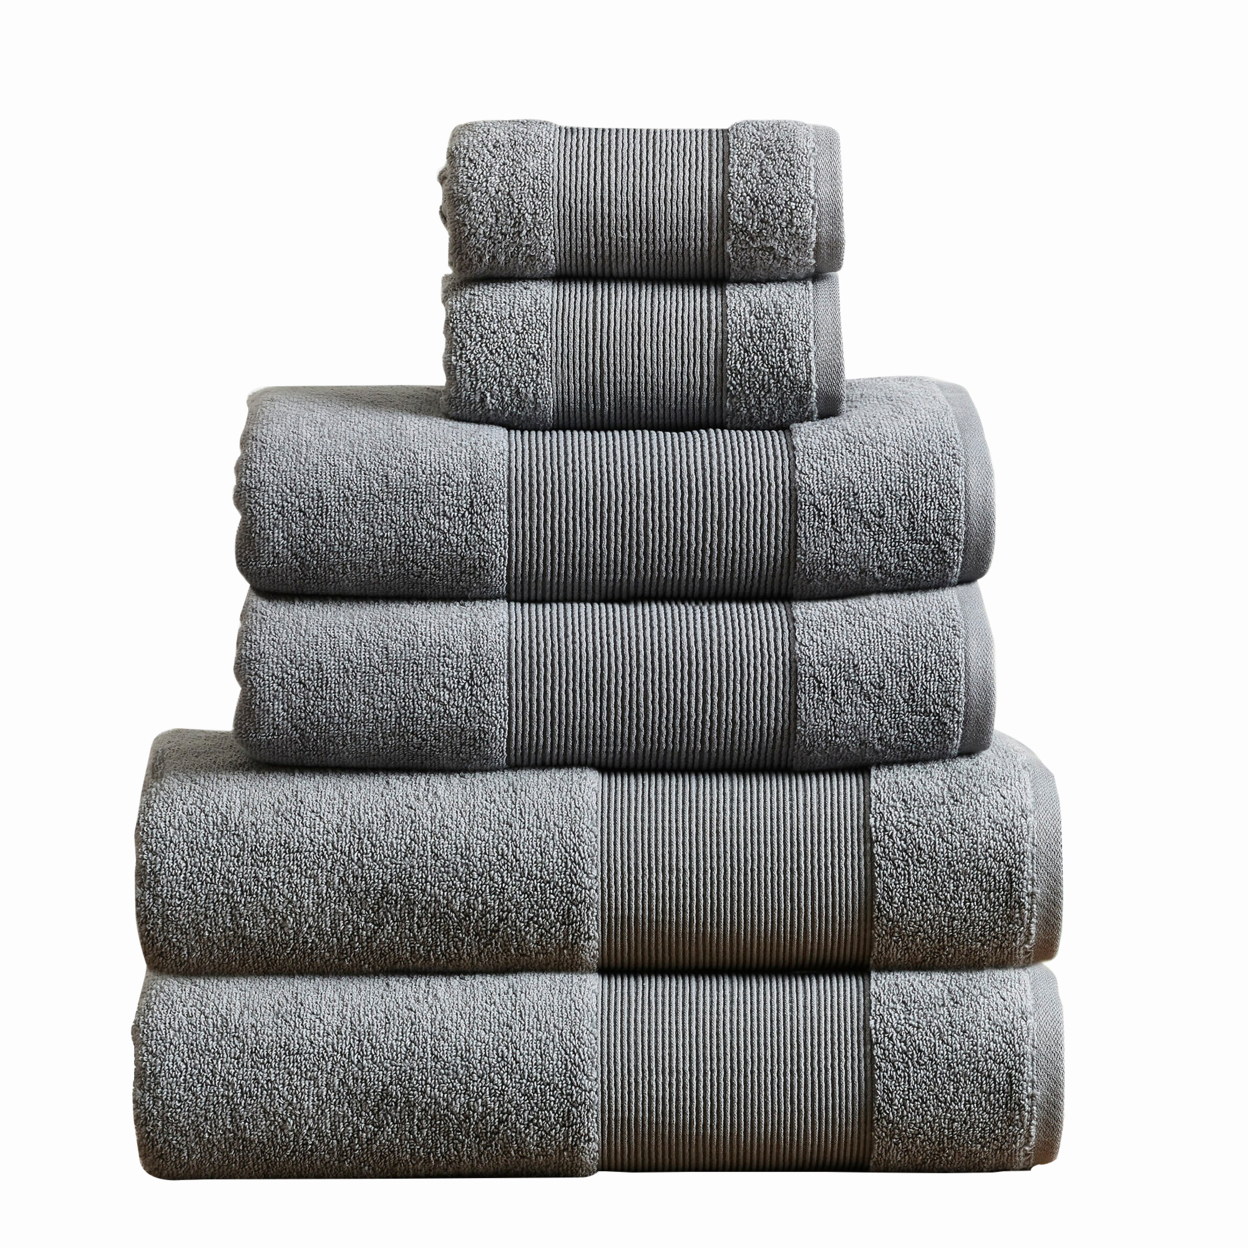 Indy Modern 6 Piece Cotton Towel Set, Softly Textured Design, Dark Gray- Saltoro Sherpi